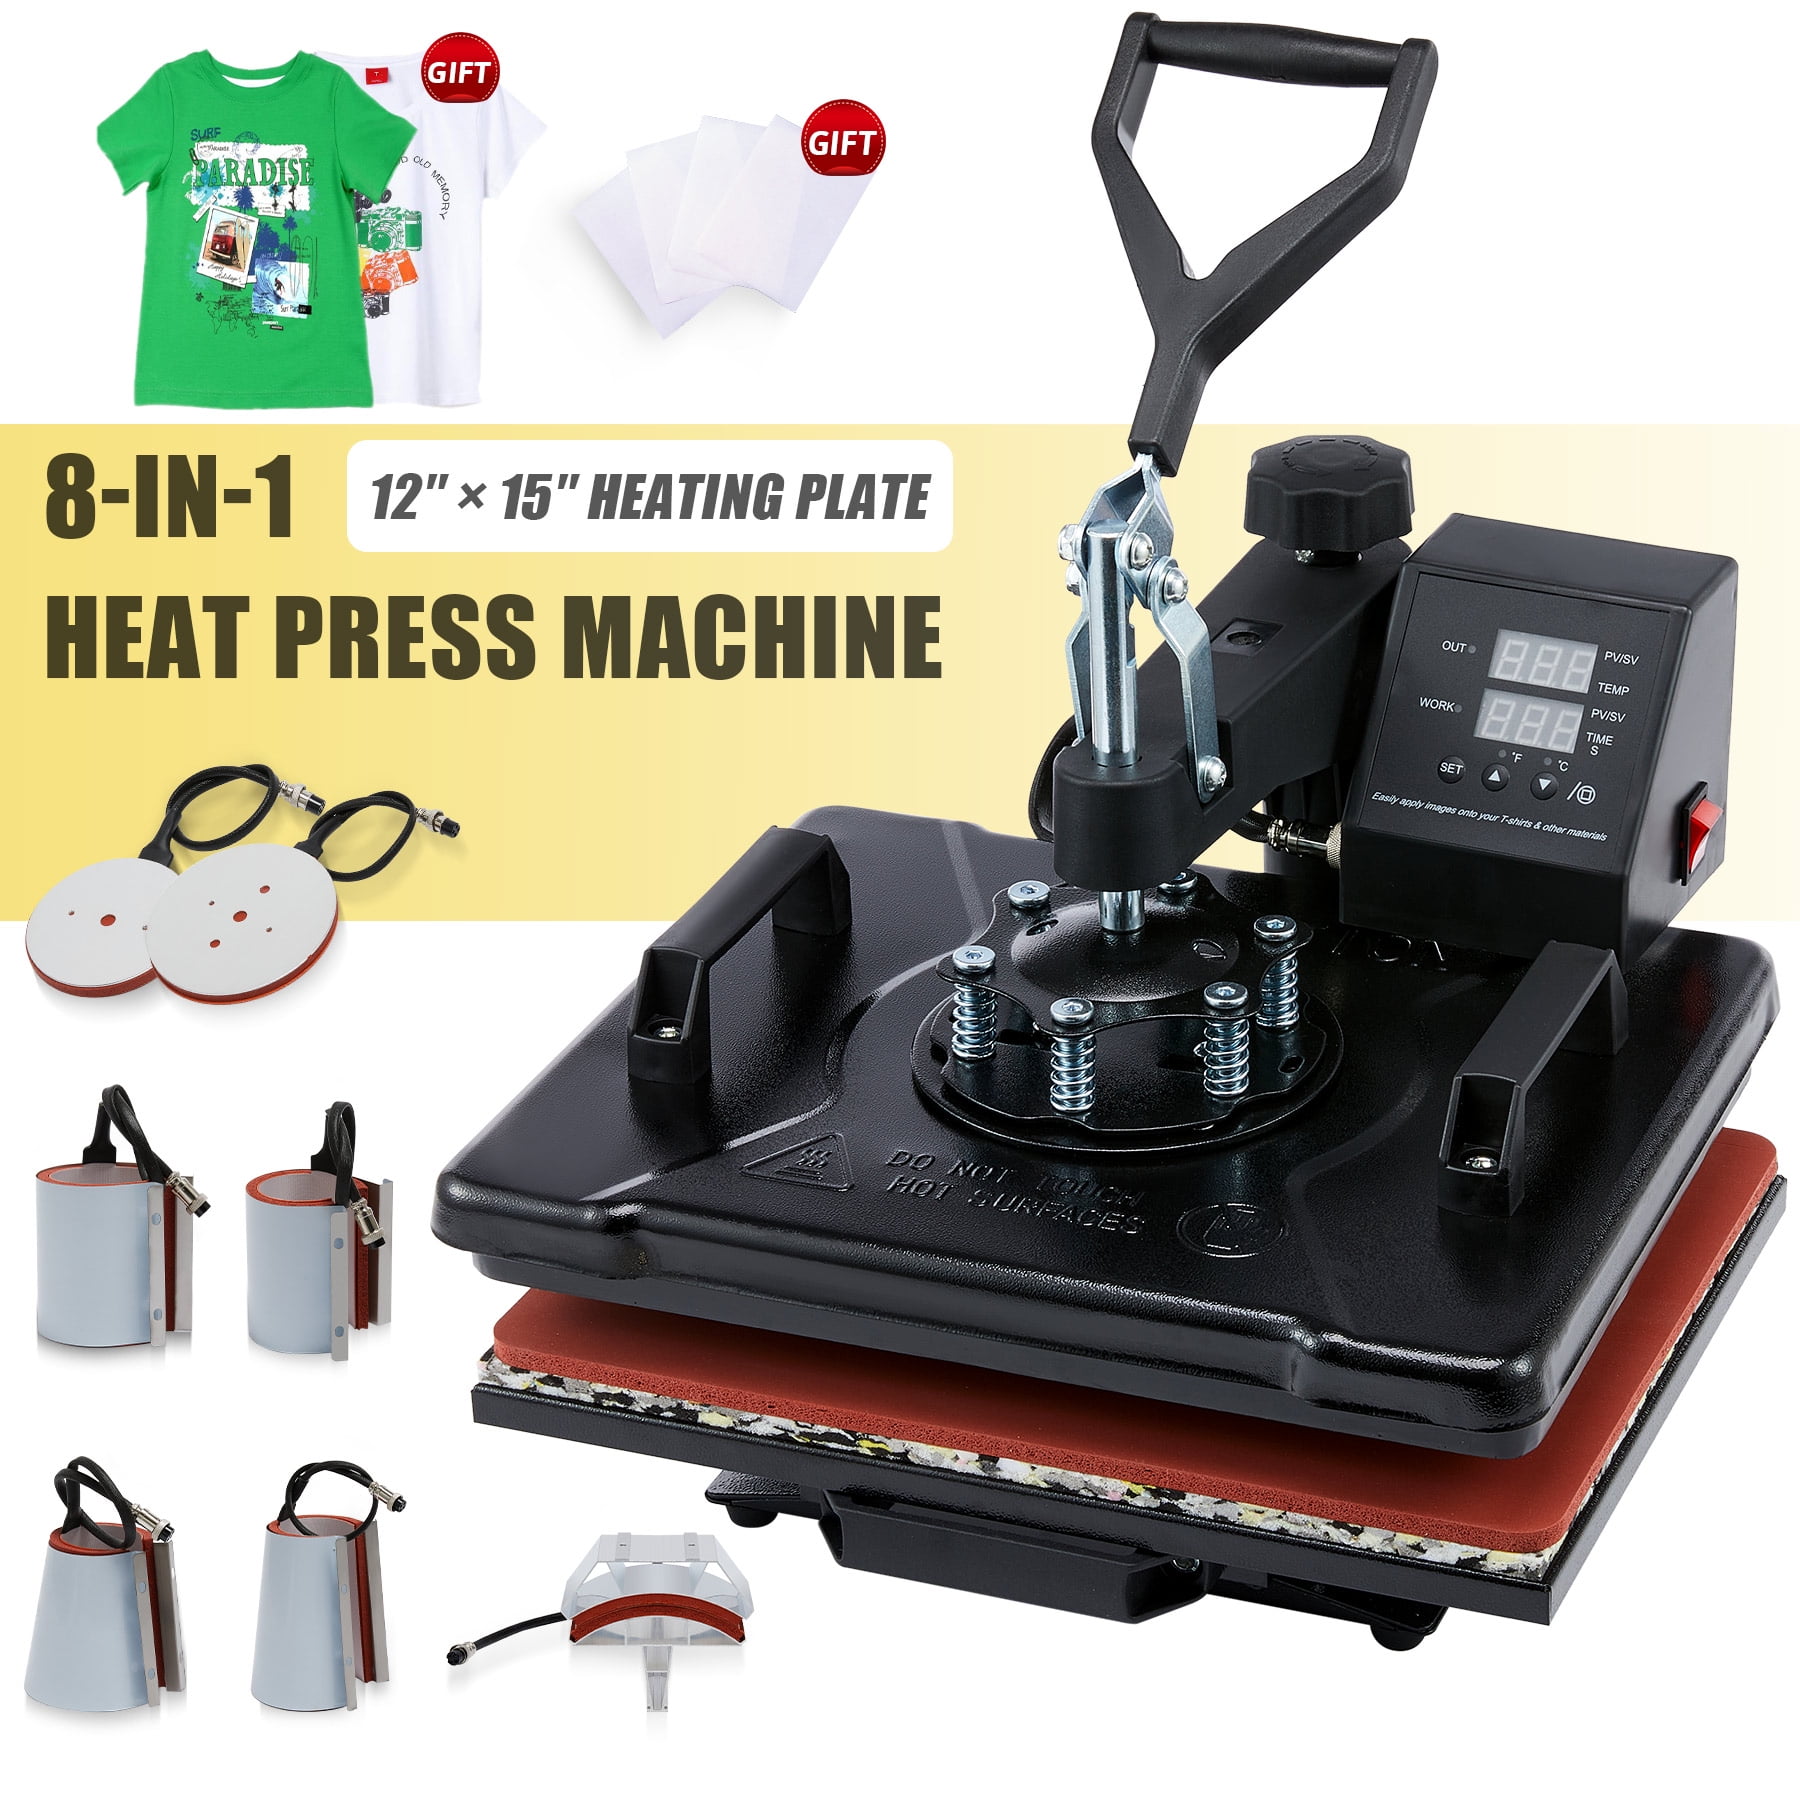 12"x9" SWING AWAY Digital Heat Press Machine T-Shirts Sublimation DIY Transfer 